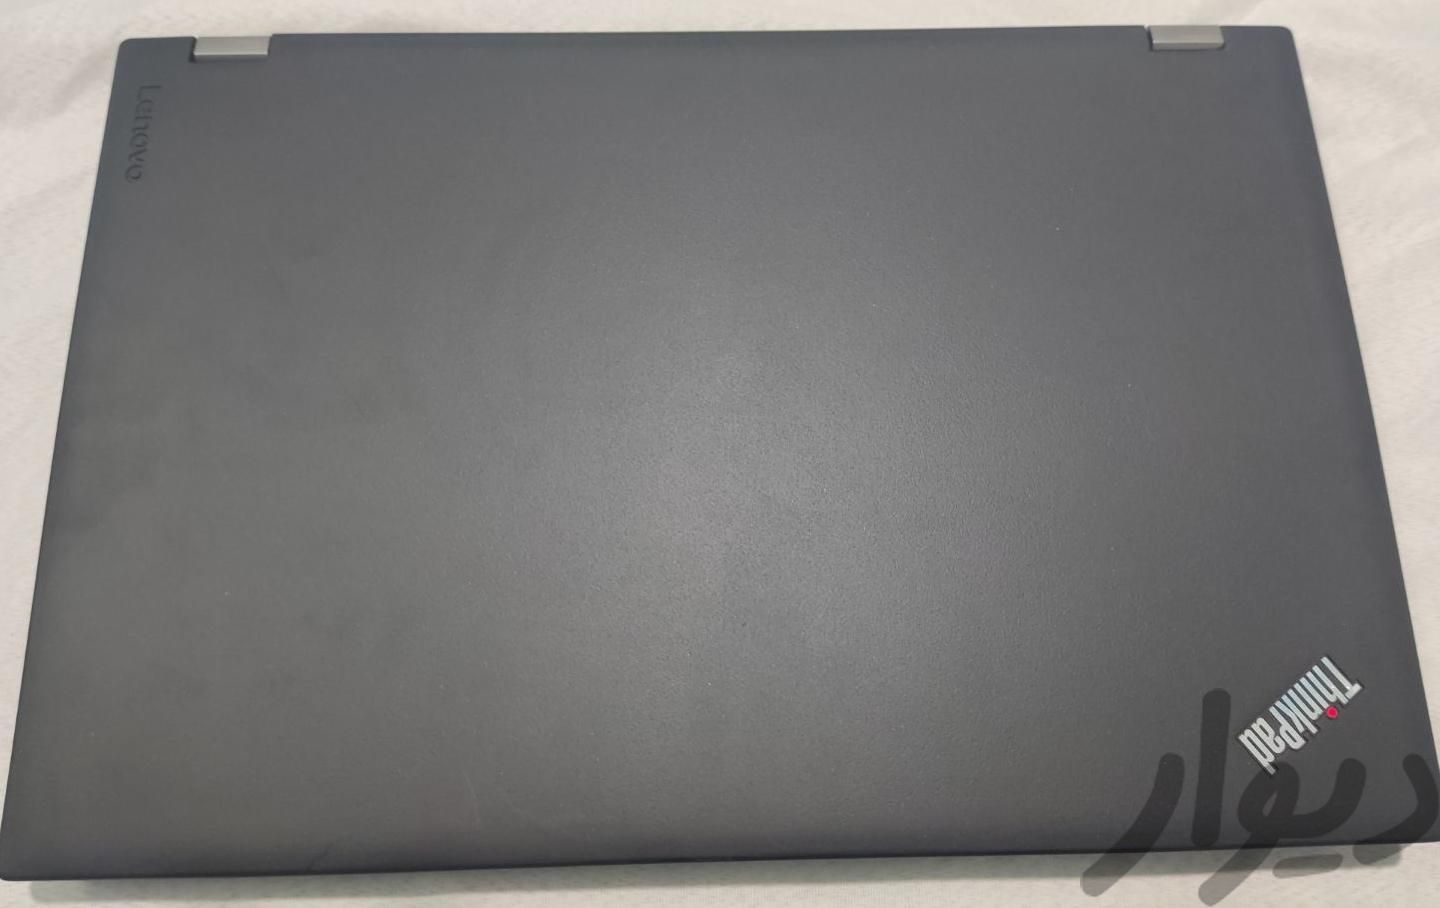 ThinkPad P50 Core i7-6820HQ|رایانه همراه|تهران, کوثر|دیوار